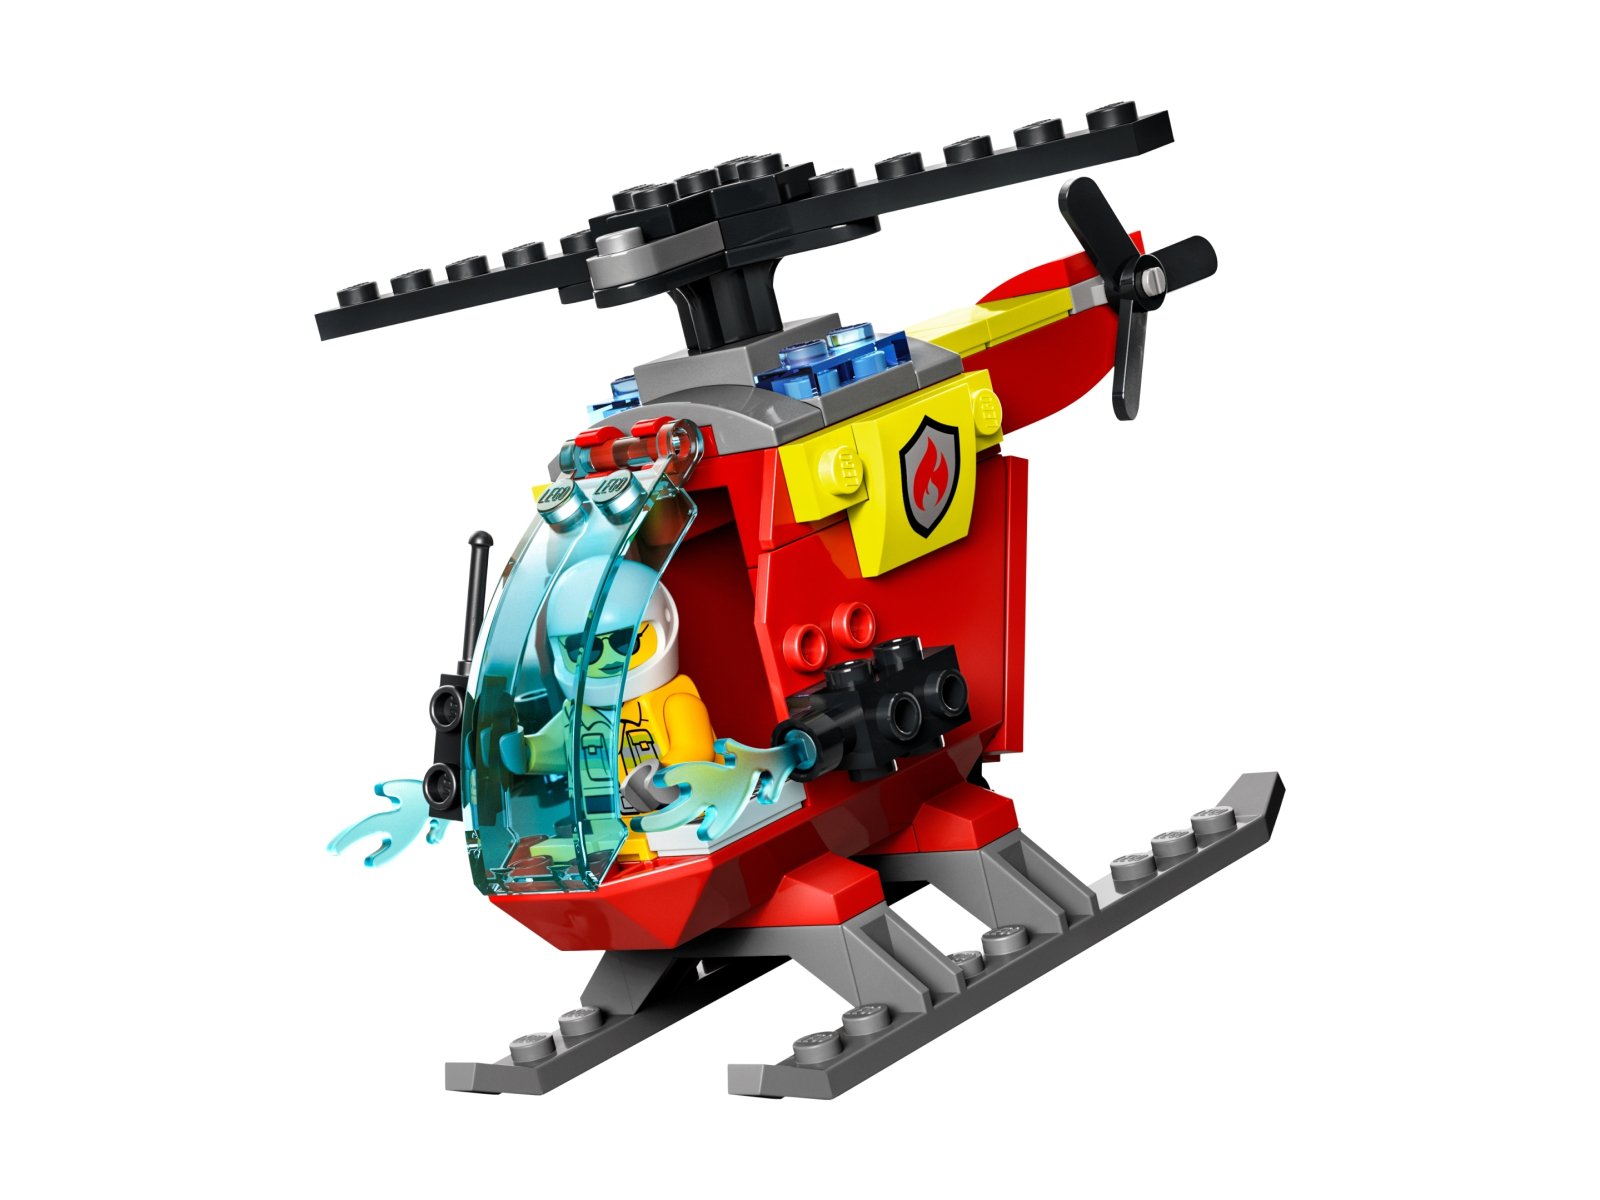 LEGO City Helikopter strażacki 60318